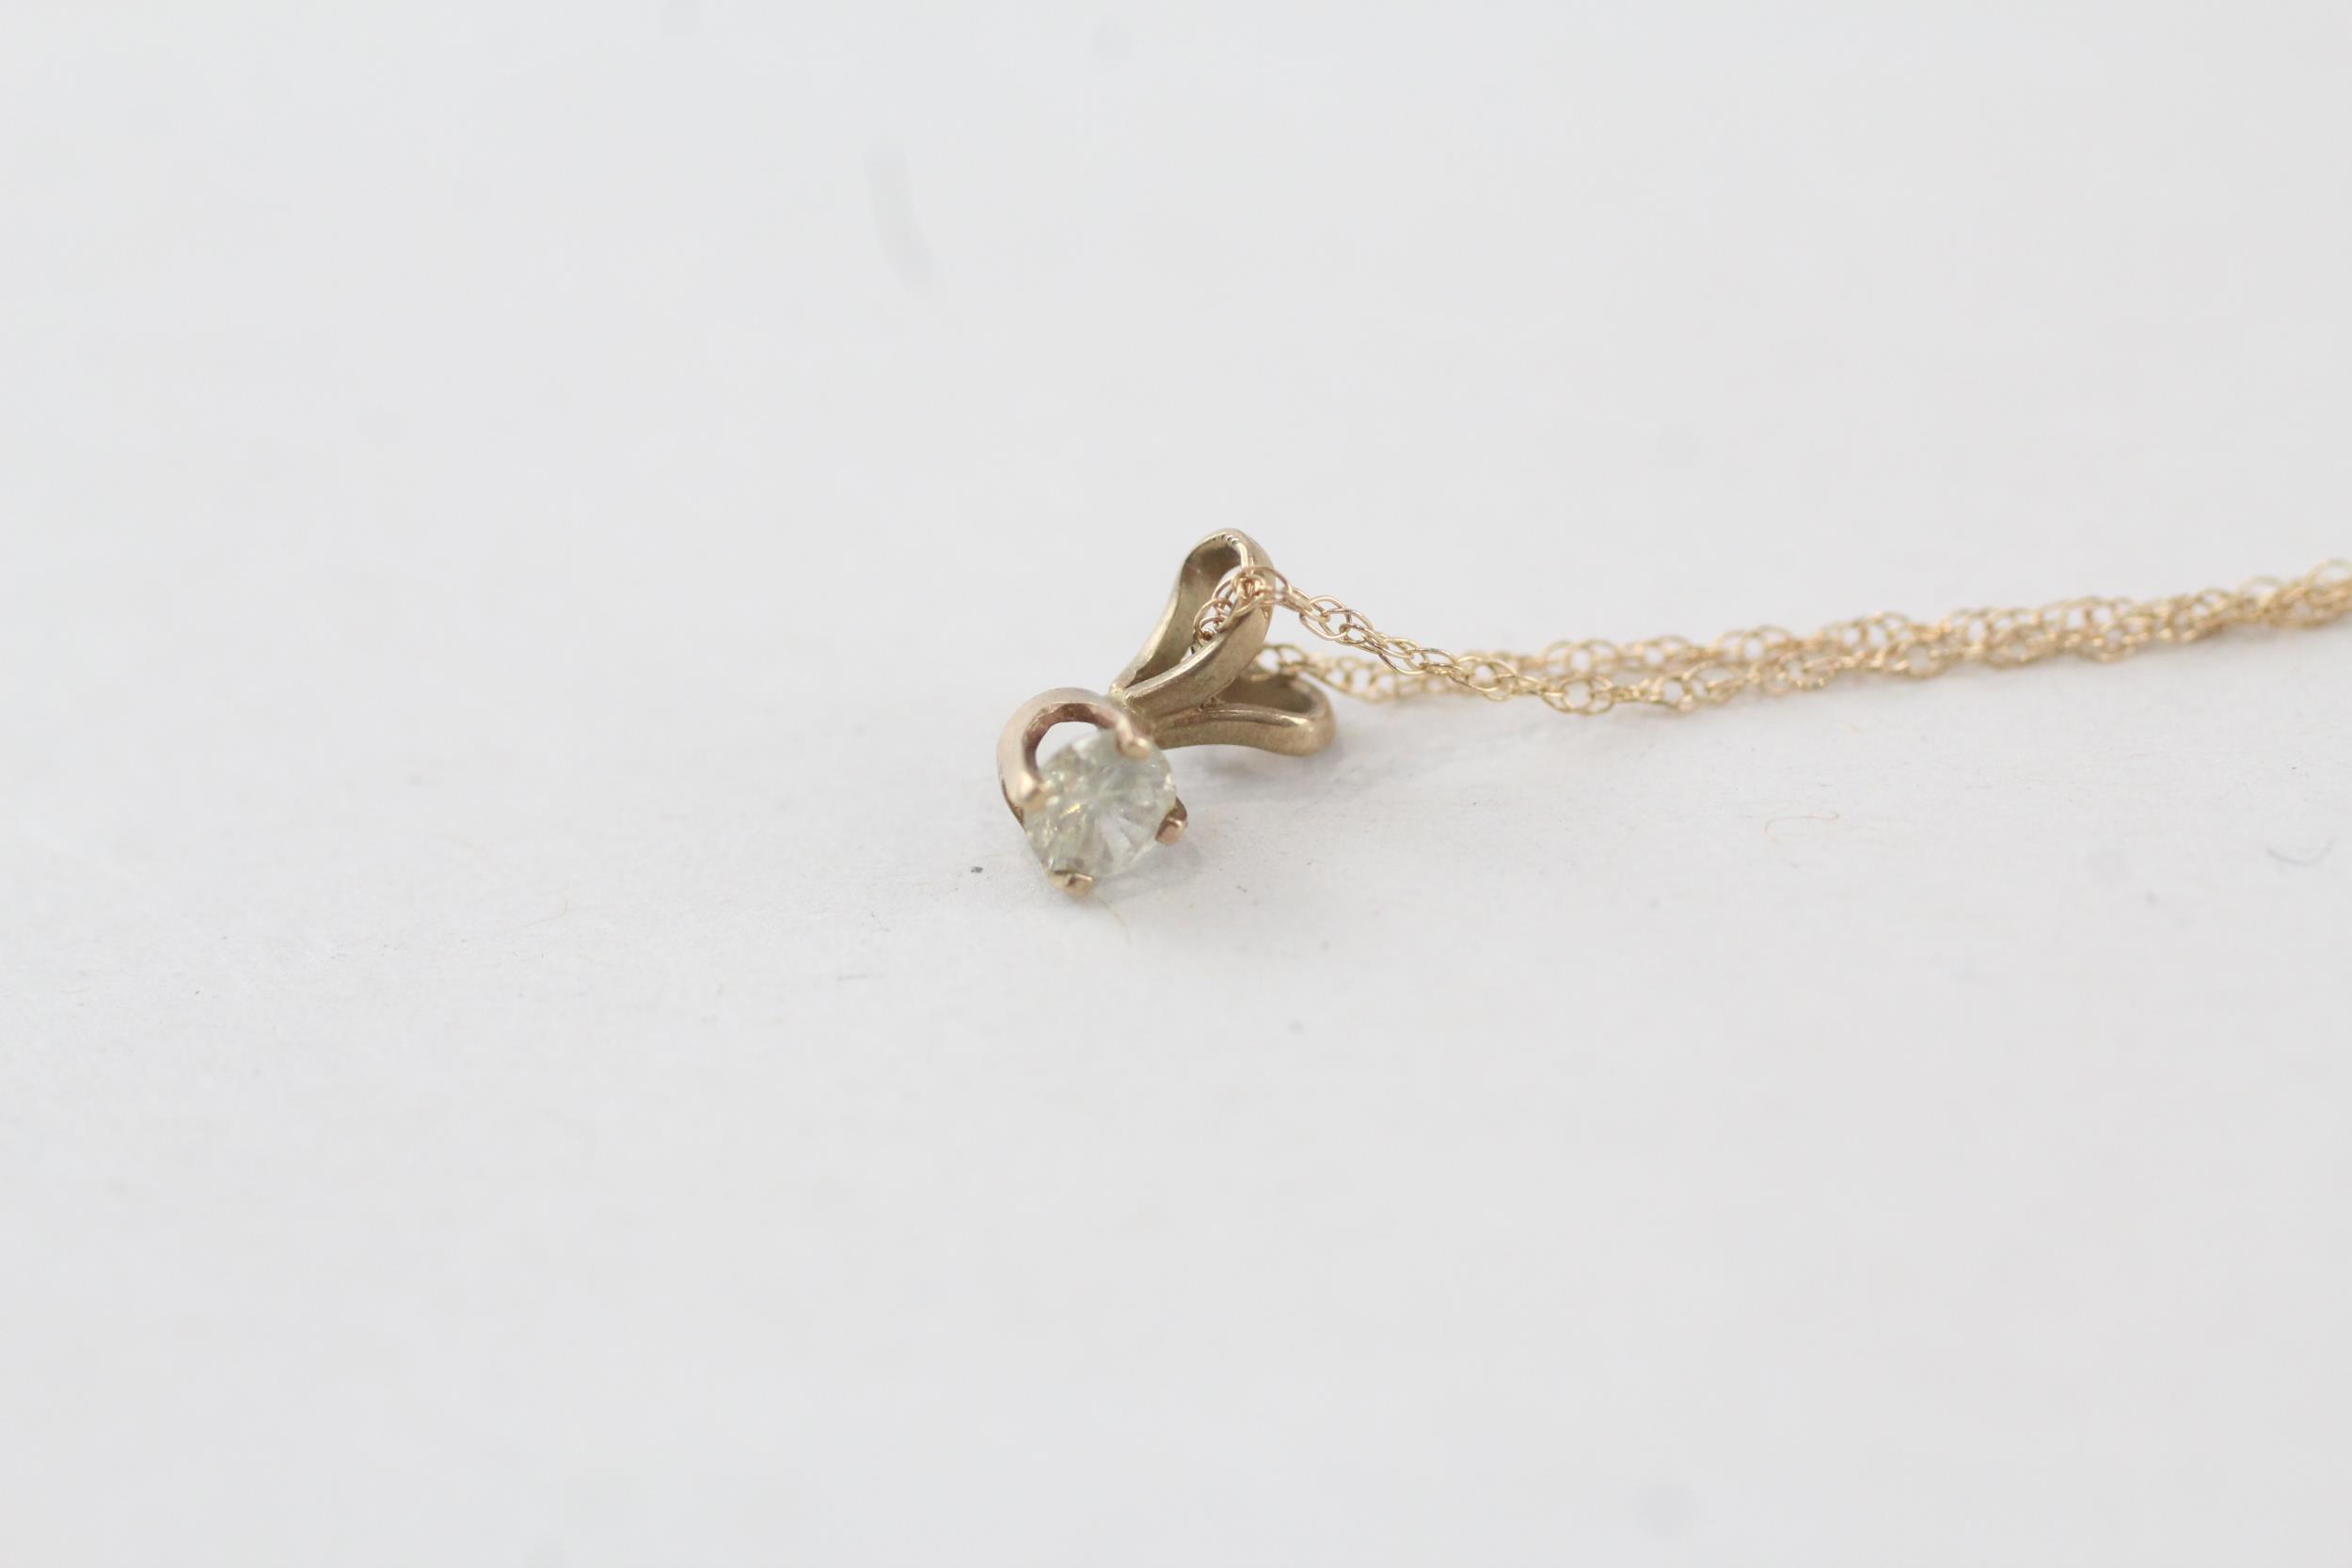 9ct gold round brilliant cut diamond set solitaire pendant necklace 0.5 g - Image 2 of 4